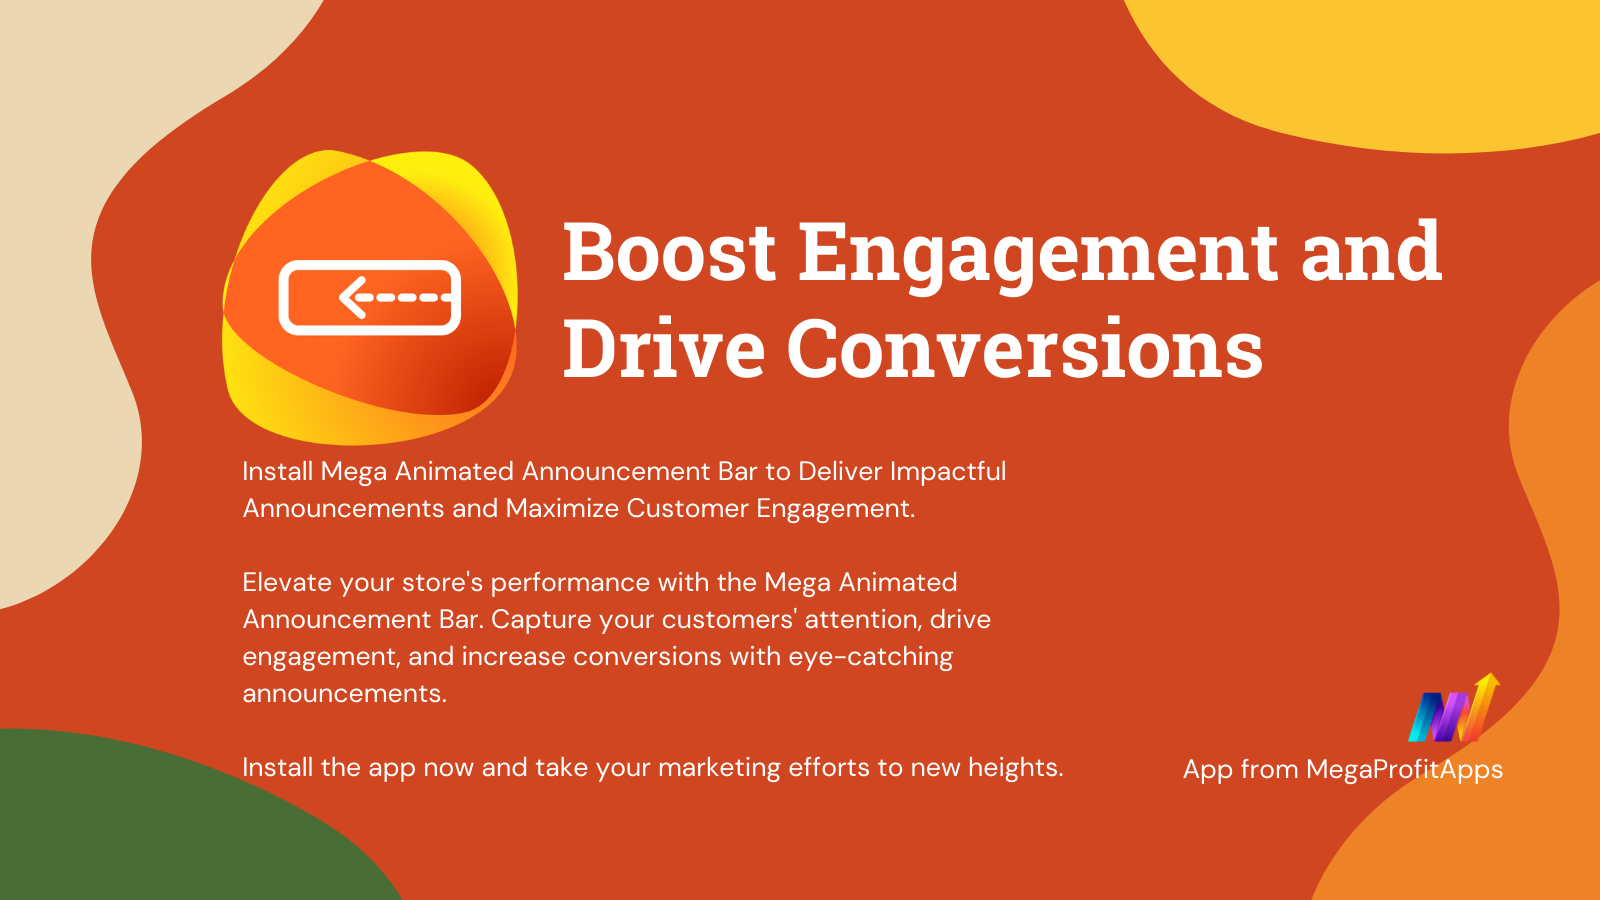 Mega Animated Announcement Bar - Maximize Customer Engagement